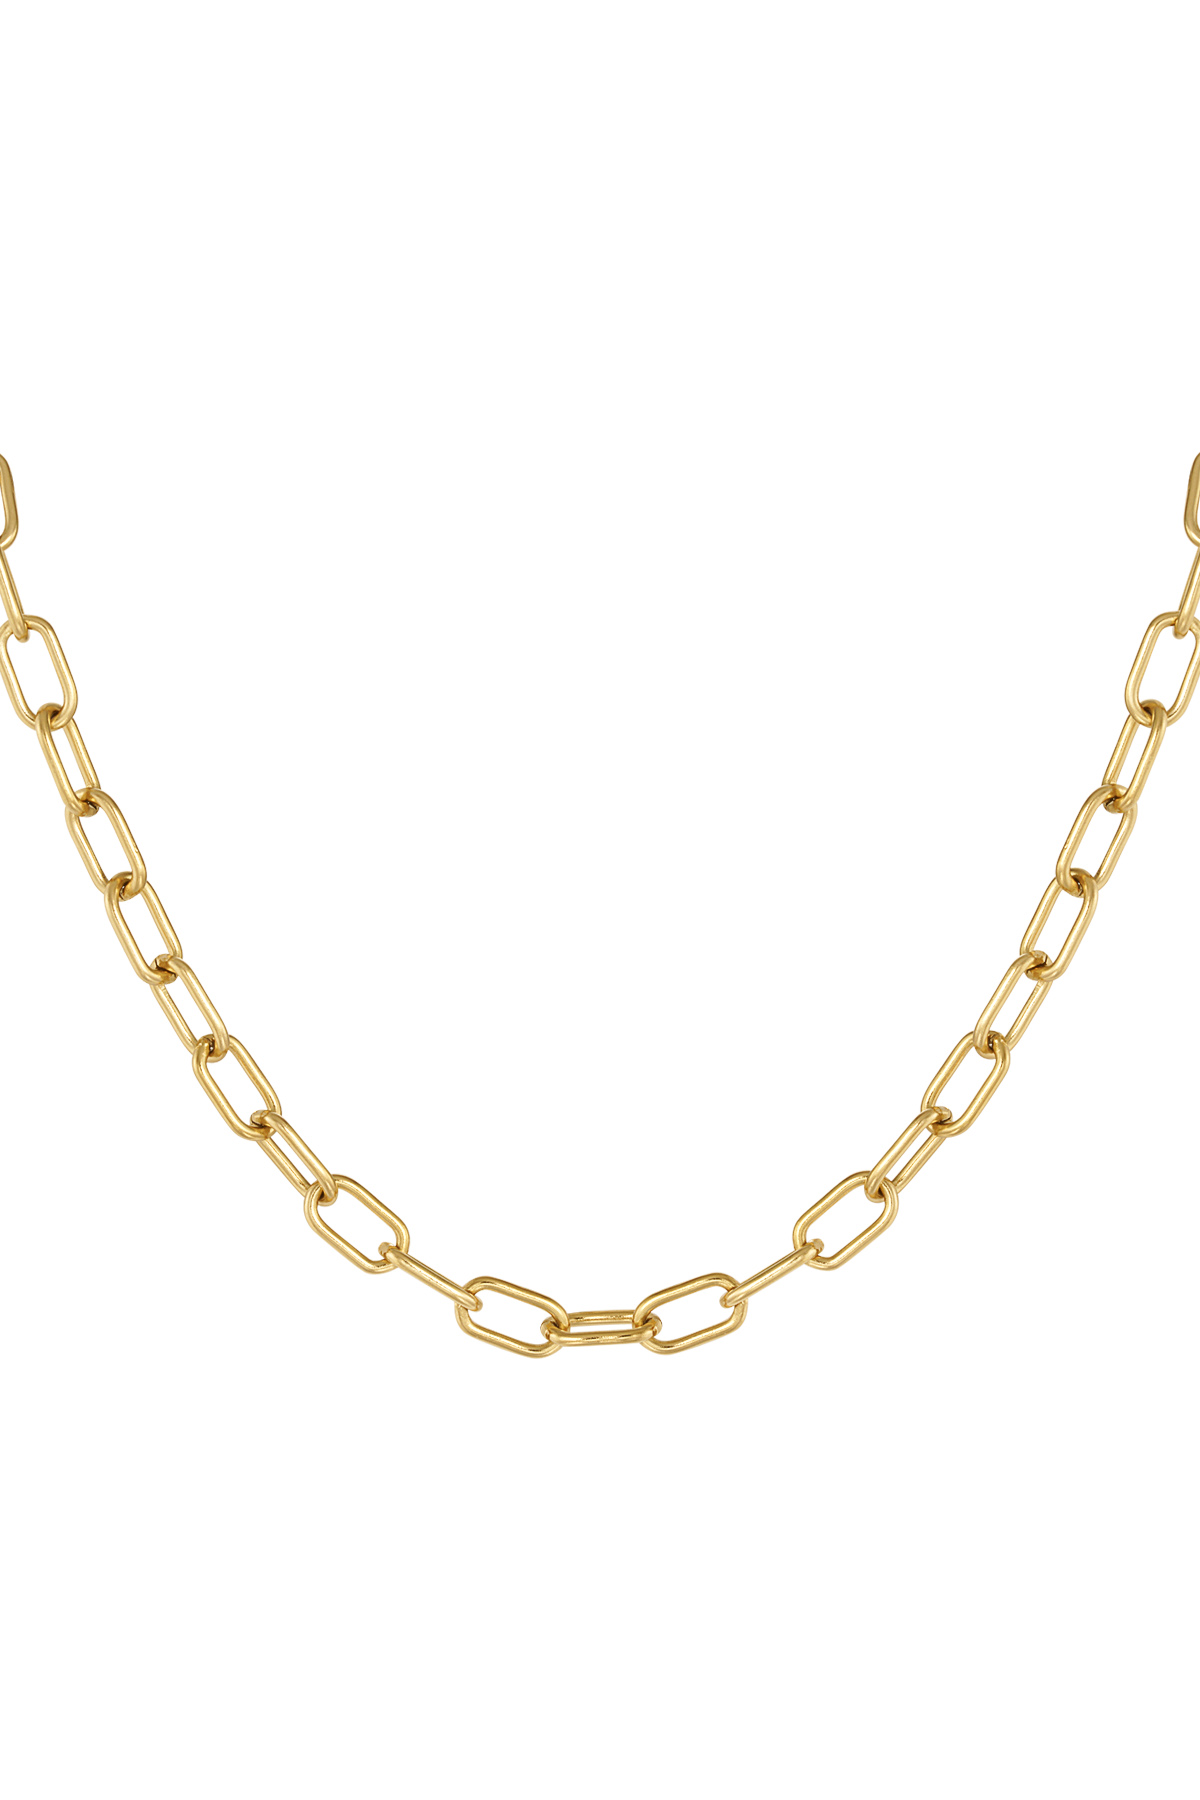 Link chain basic - gold 